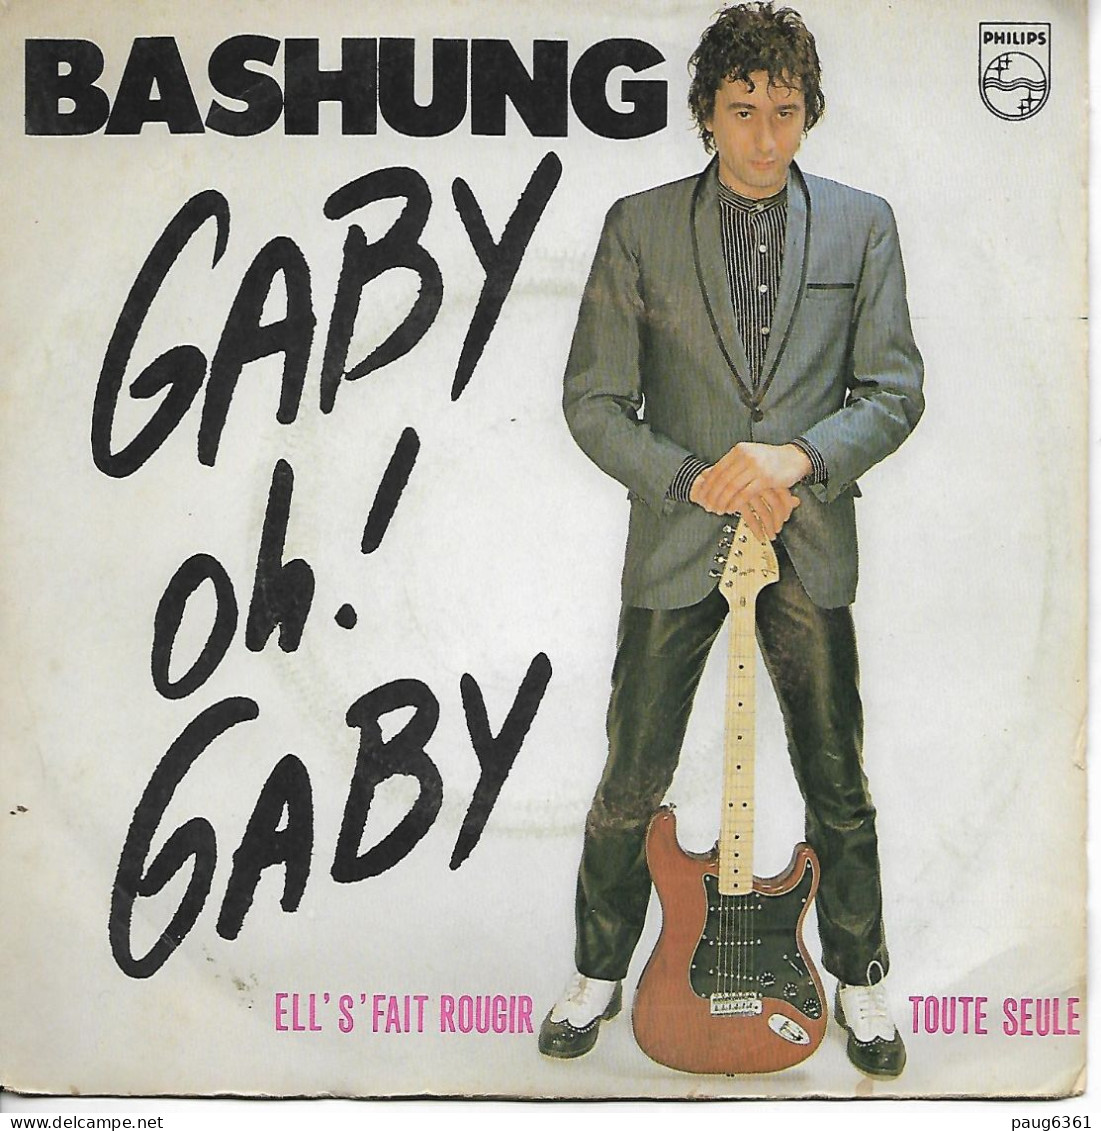 Bashung Gaby Oh! Gaby - Ell's'fait Rougir Toute Seule - Philips - 6172 310 PG 100 - Phonogram  BON ETAT VG - Other - French Music